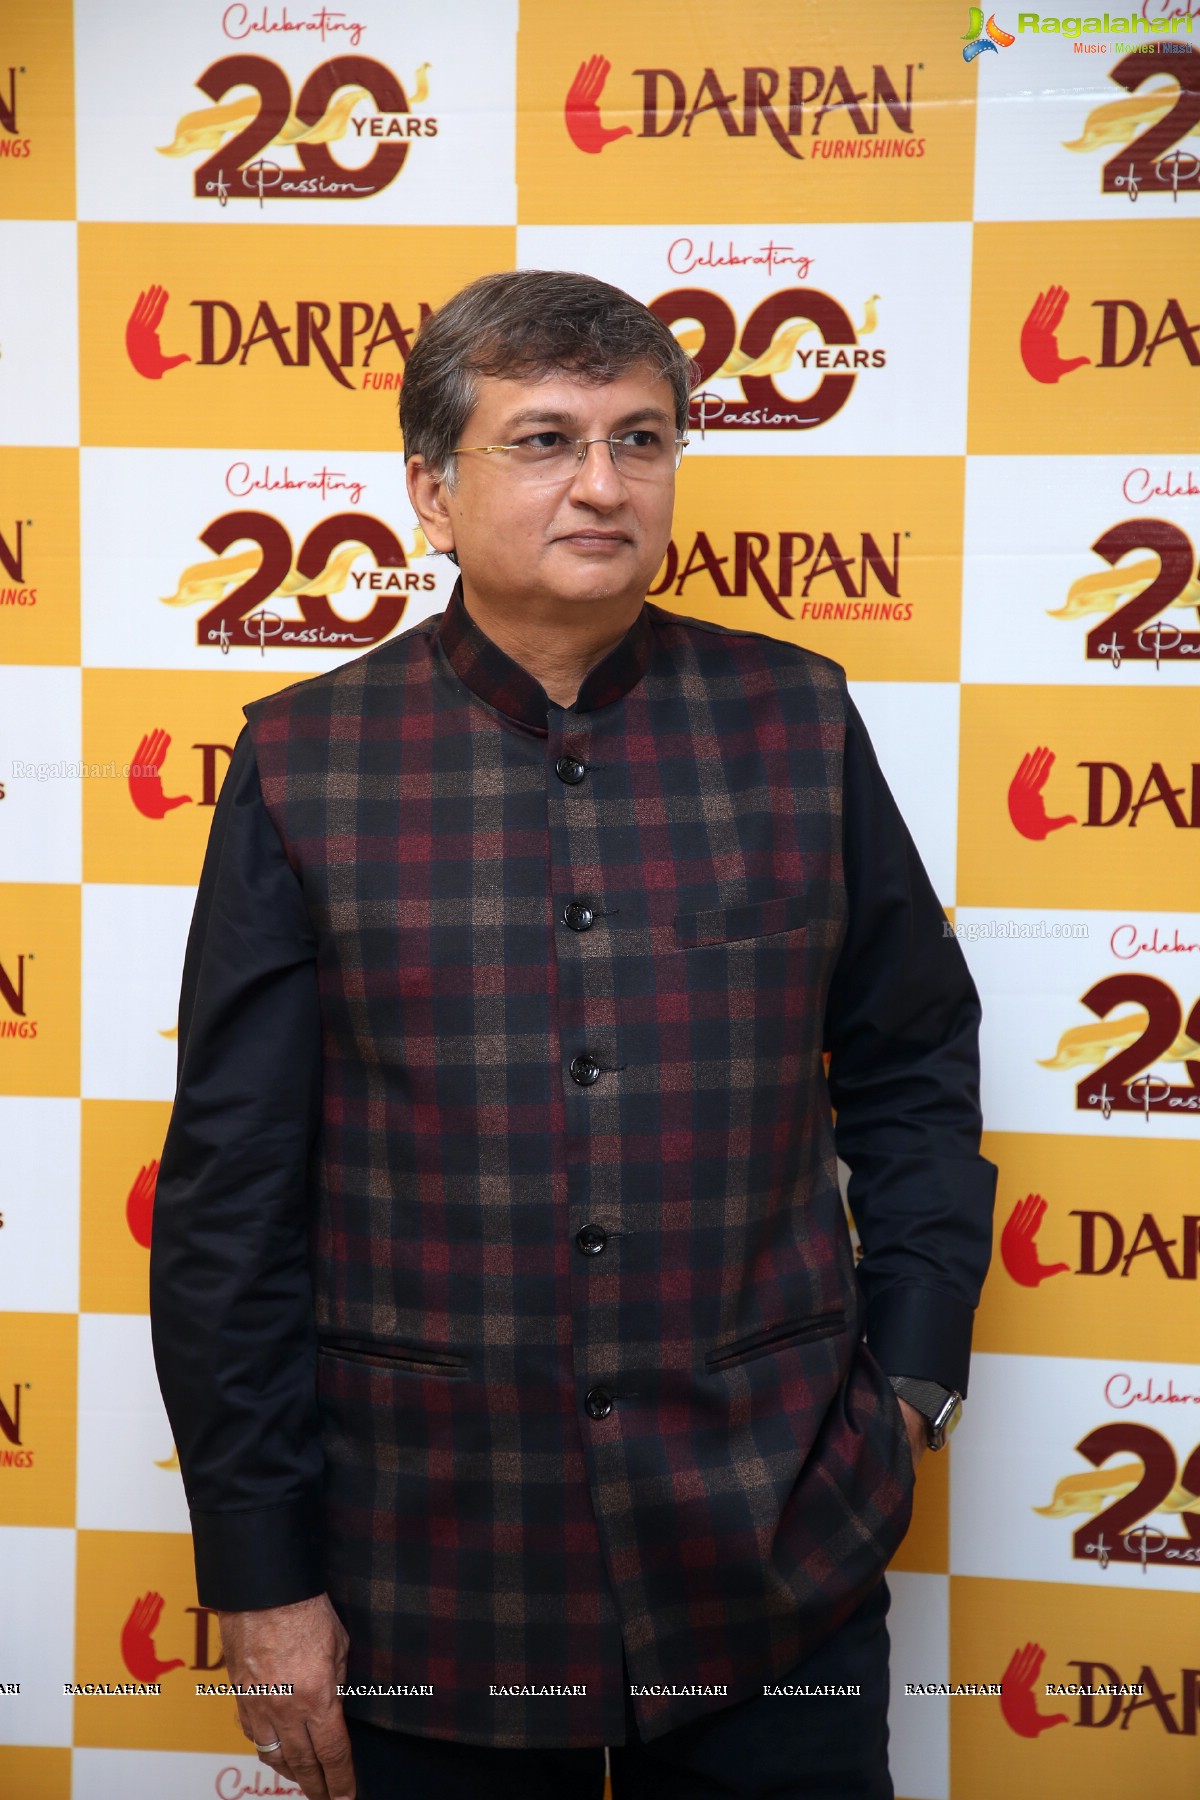 Darpan Furnishings Celebrates Its 20th Anniversary